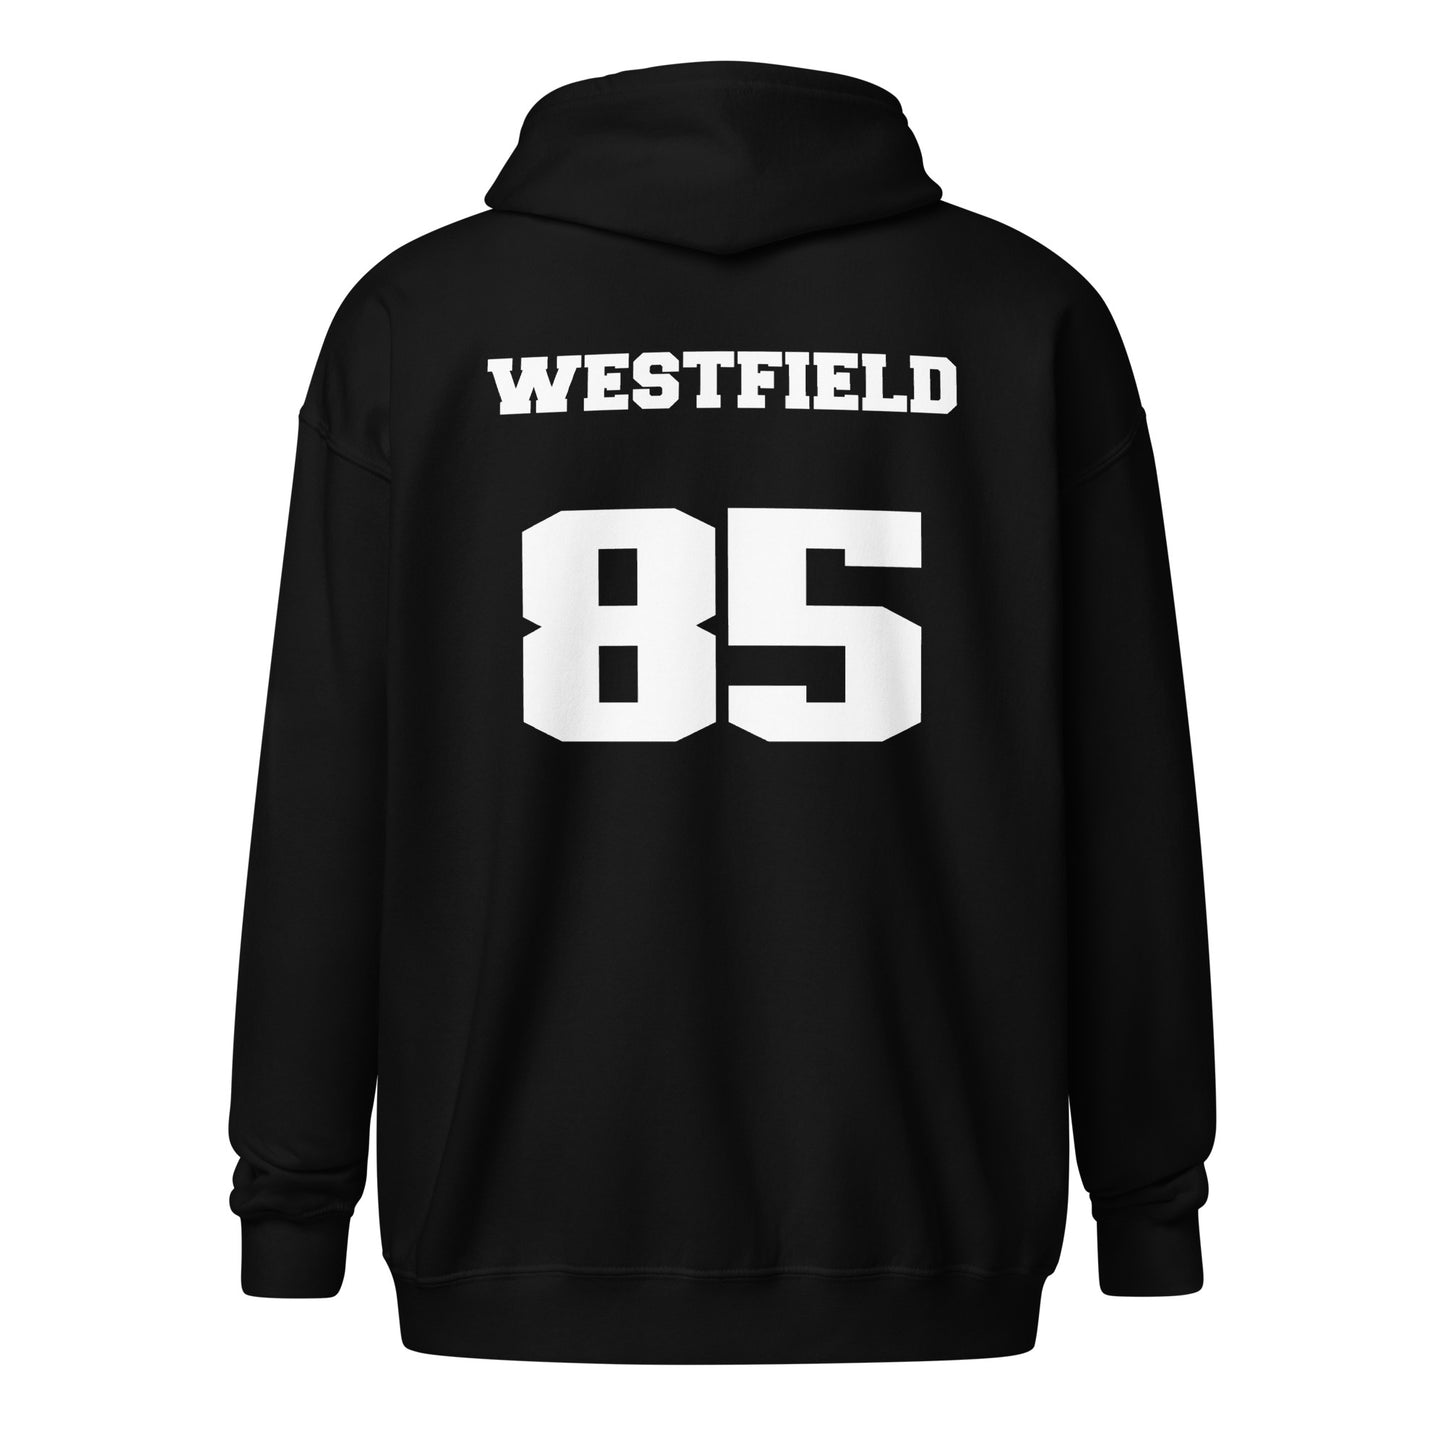 Phantoms T.Westfield zip hoodie